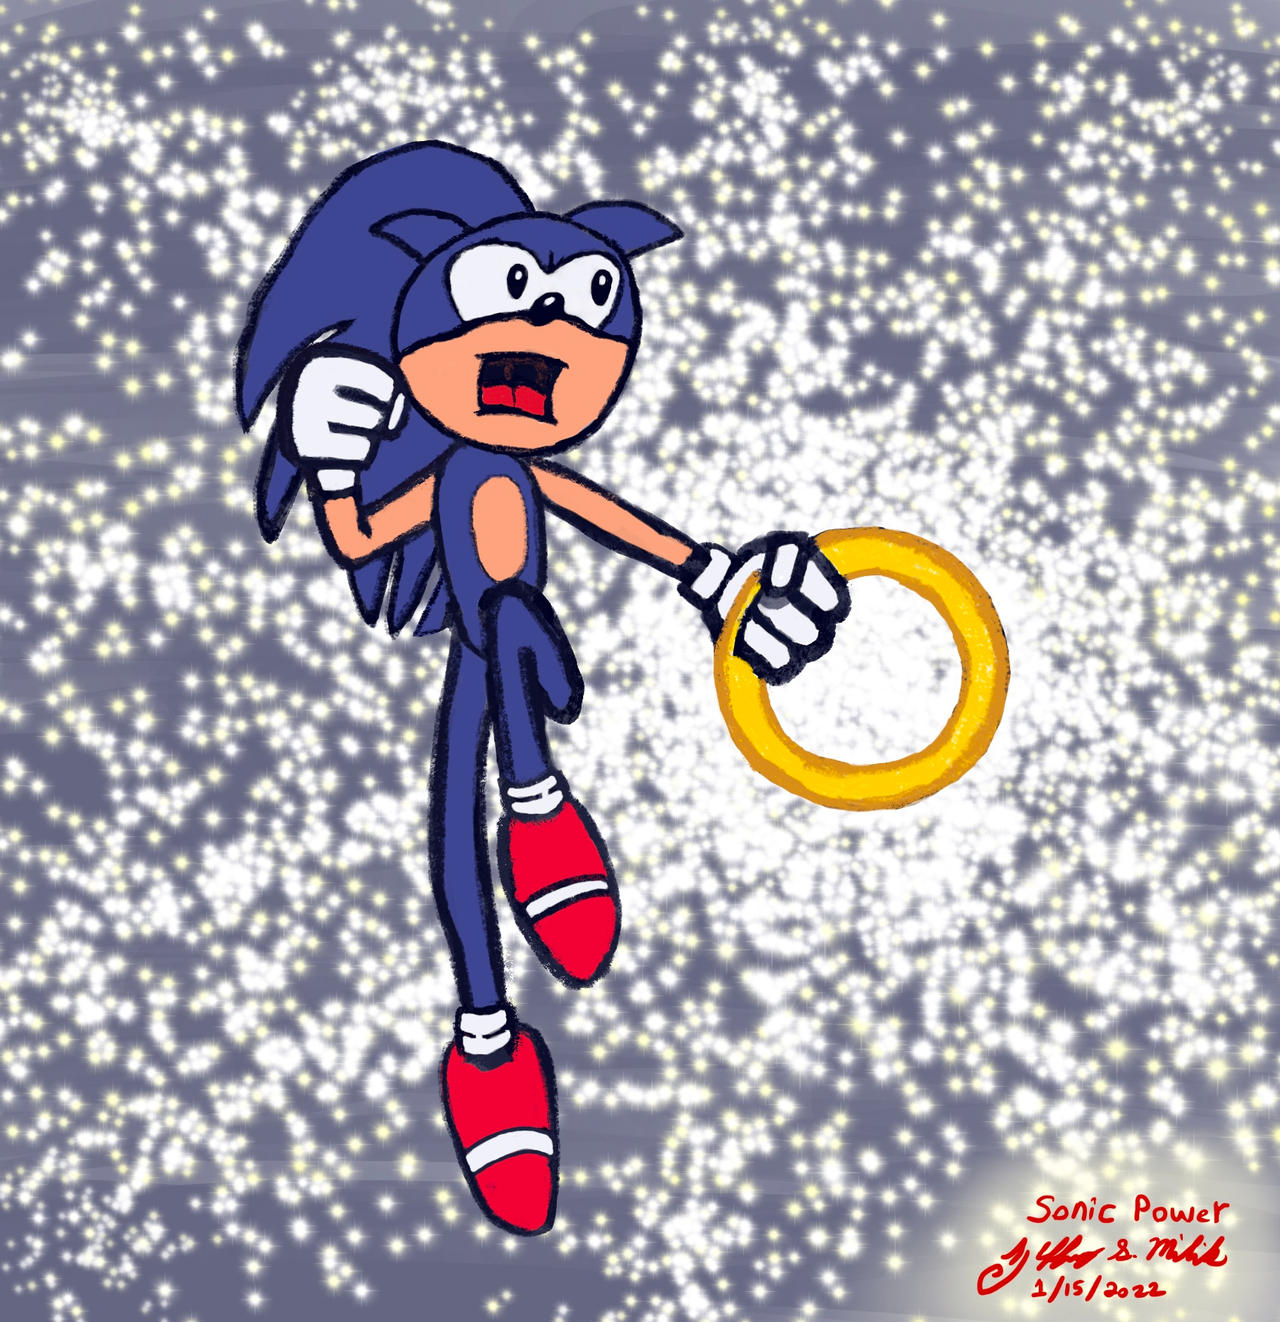 Sonic The Hedgehog (2020) Wallpaper by HigorMatosDA2005 on DeviantArt